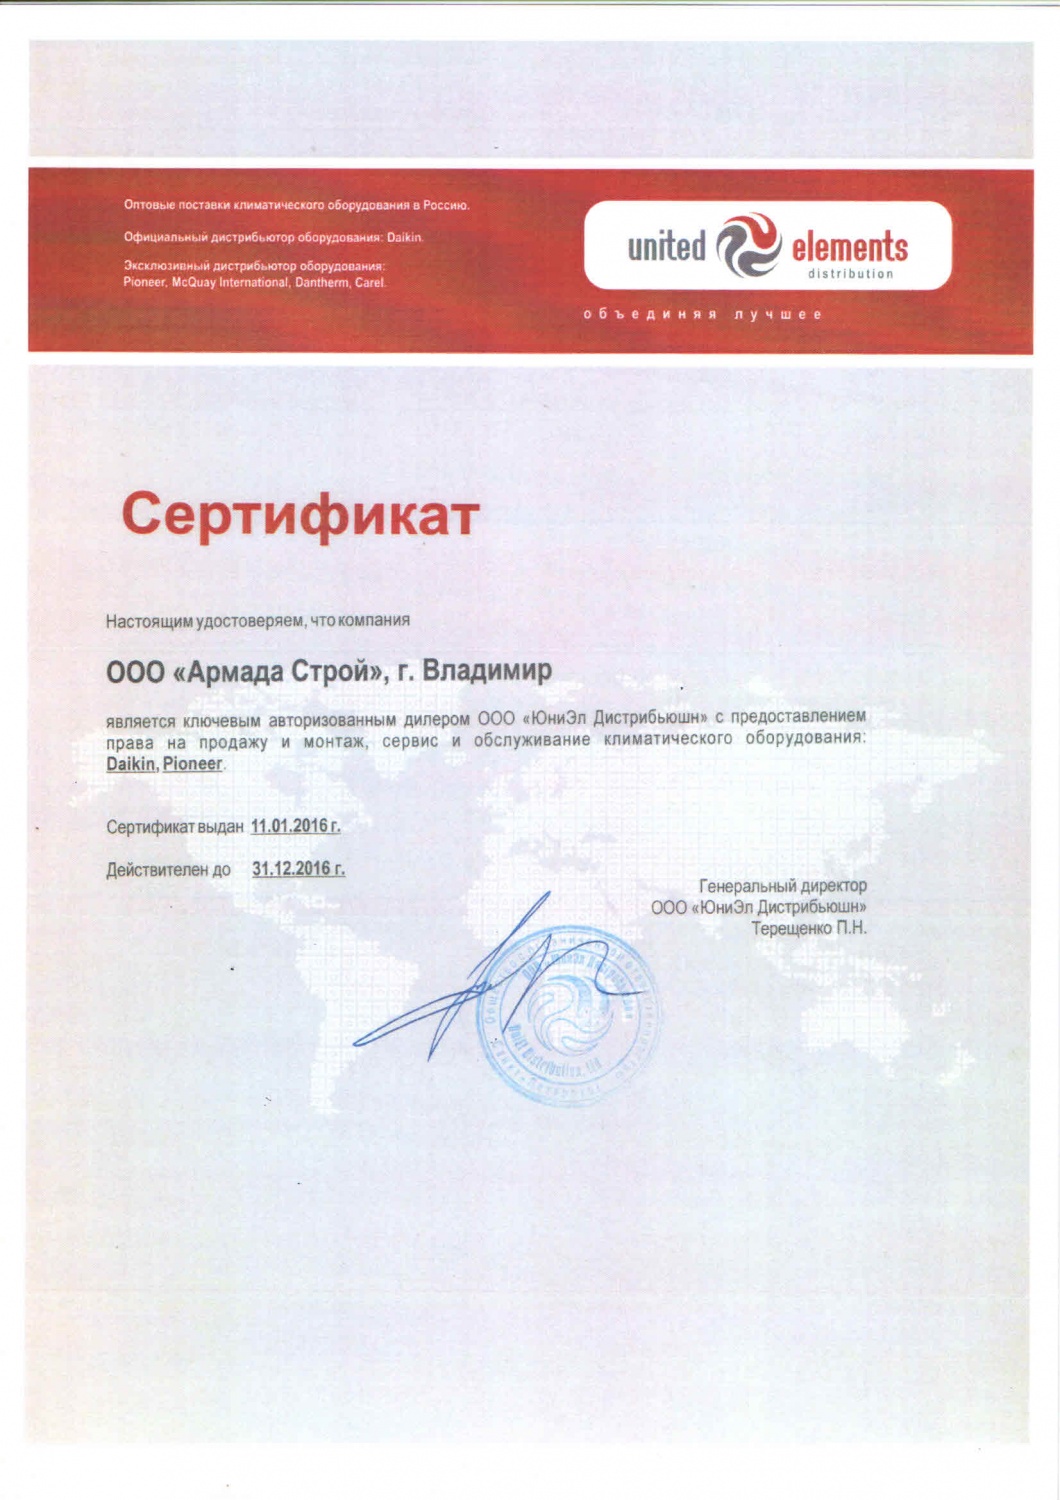 Сертификат United Elements distribution